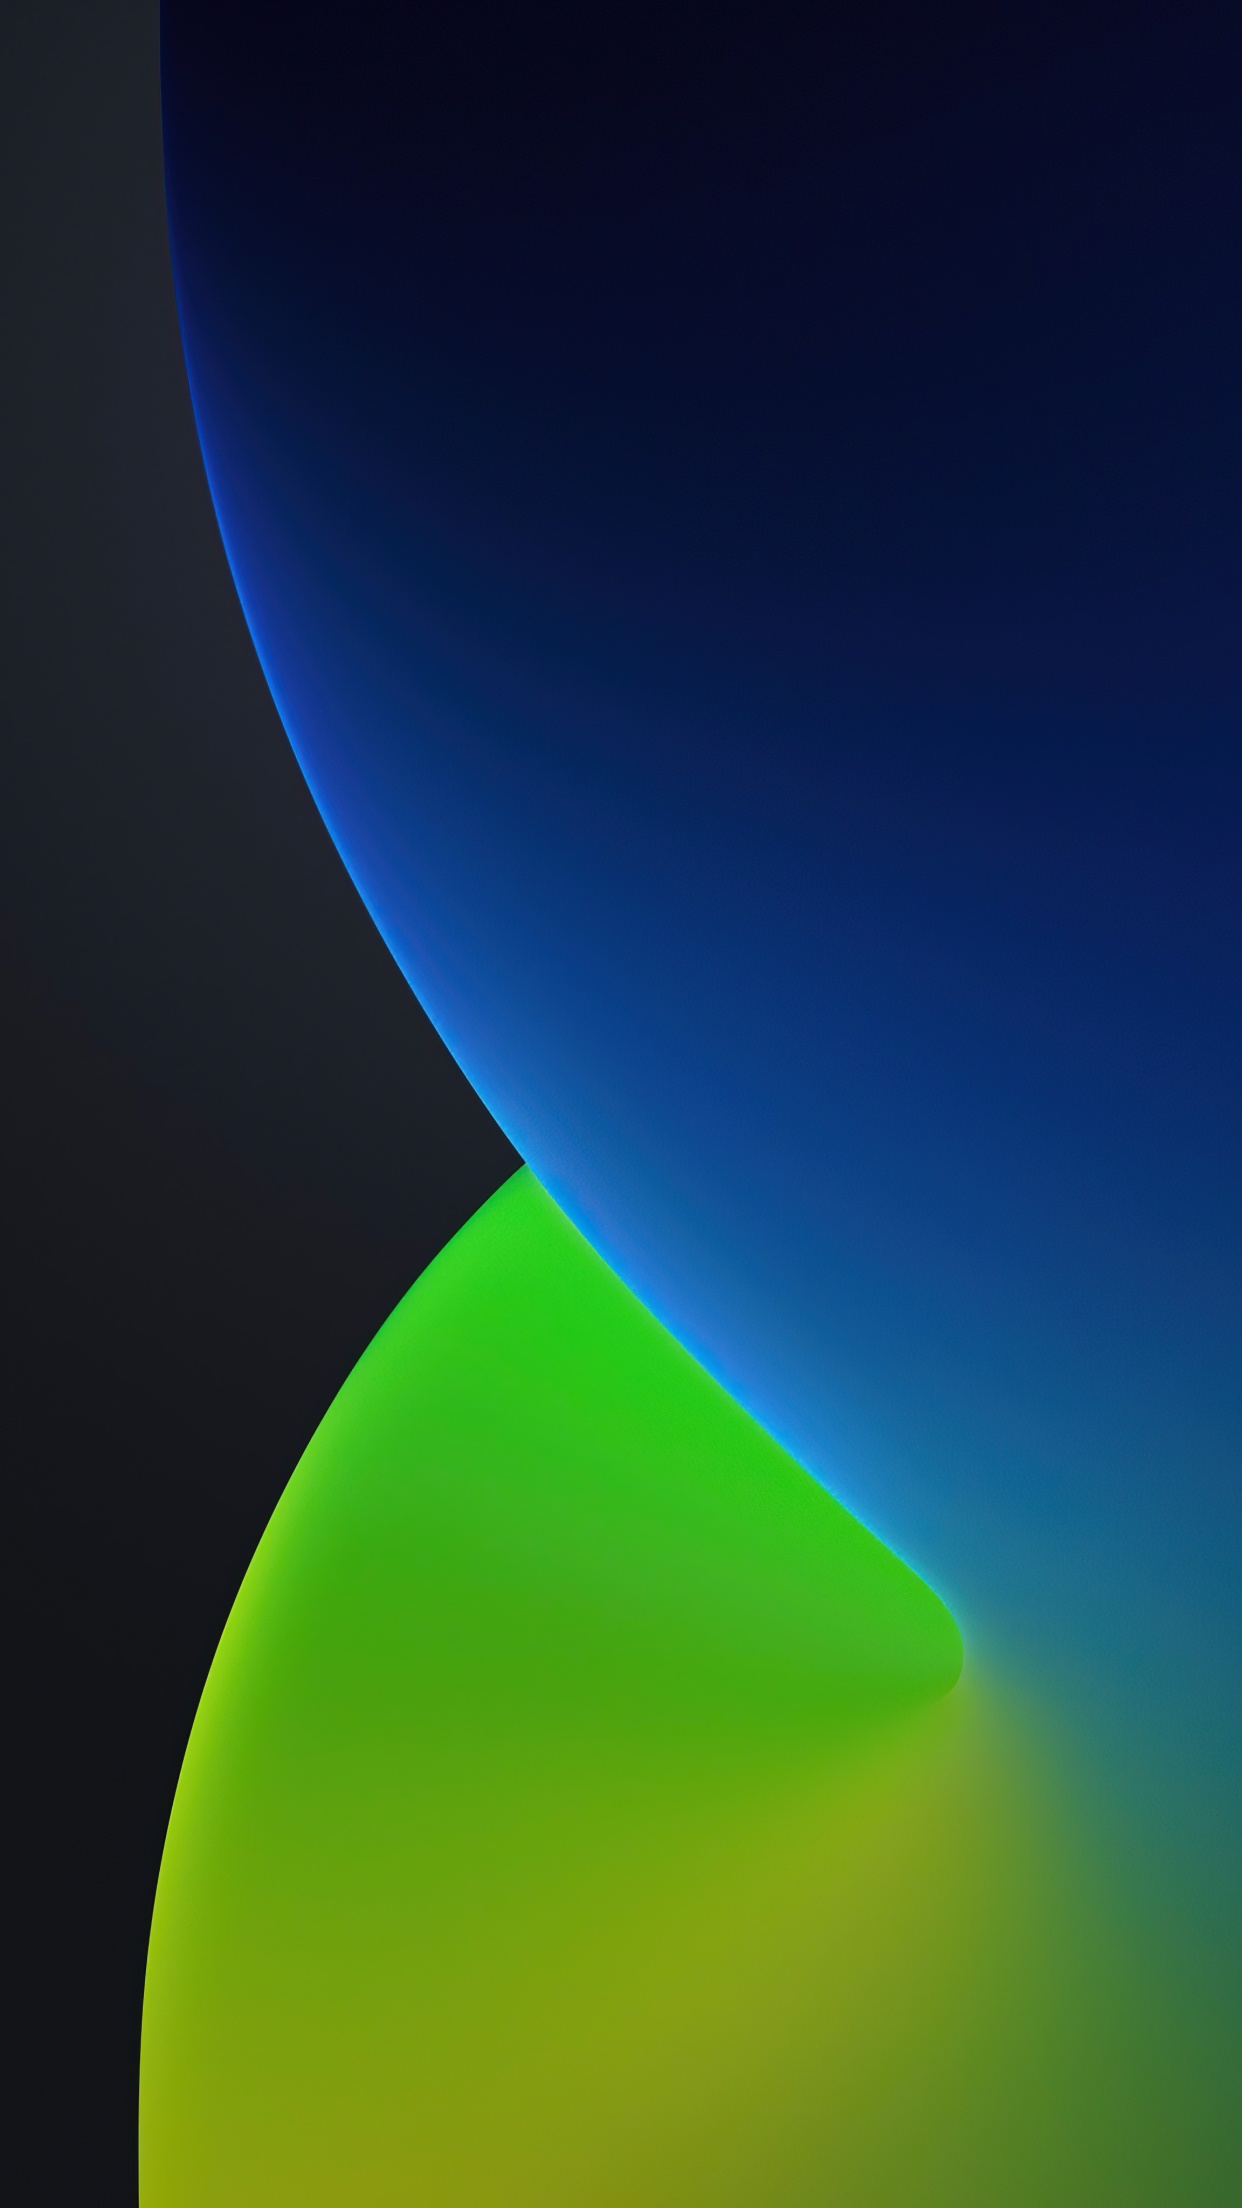 iOS 14 Wallpaper 4K, WWDC, iPhone iPadOS, Dark, Green, Blue, Gradients